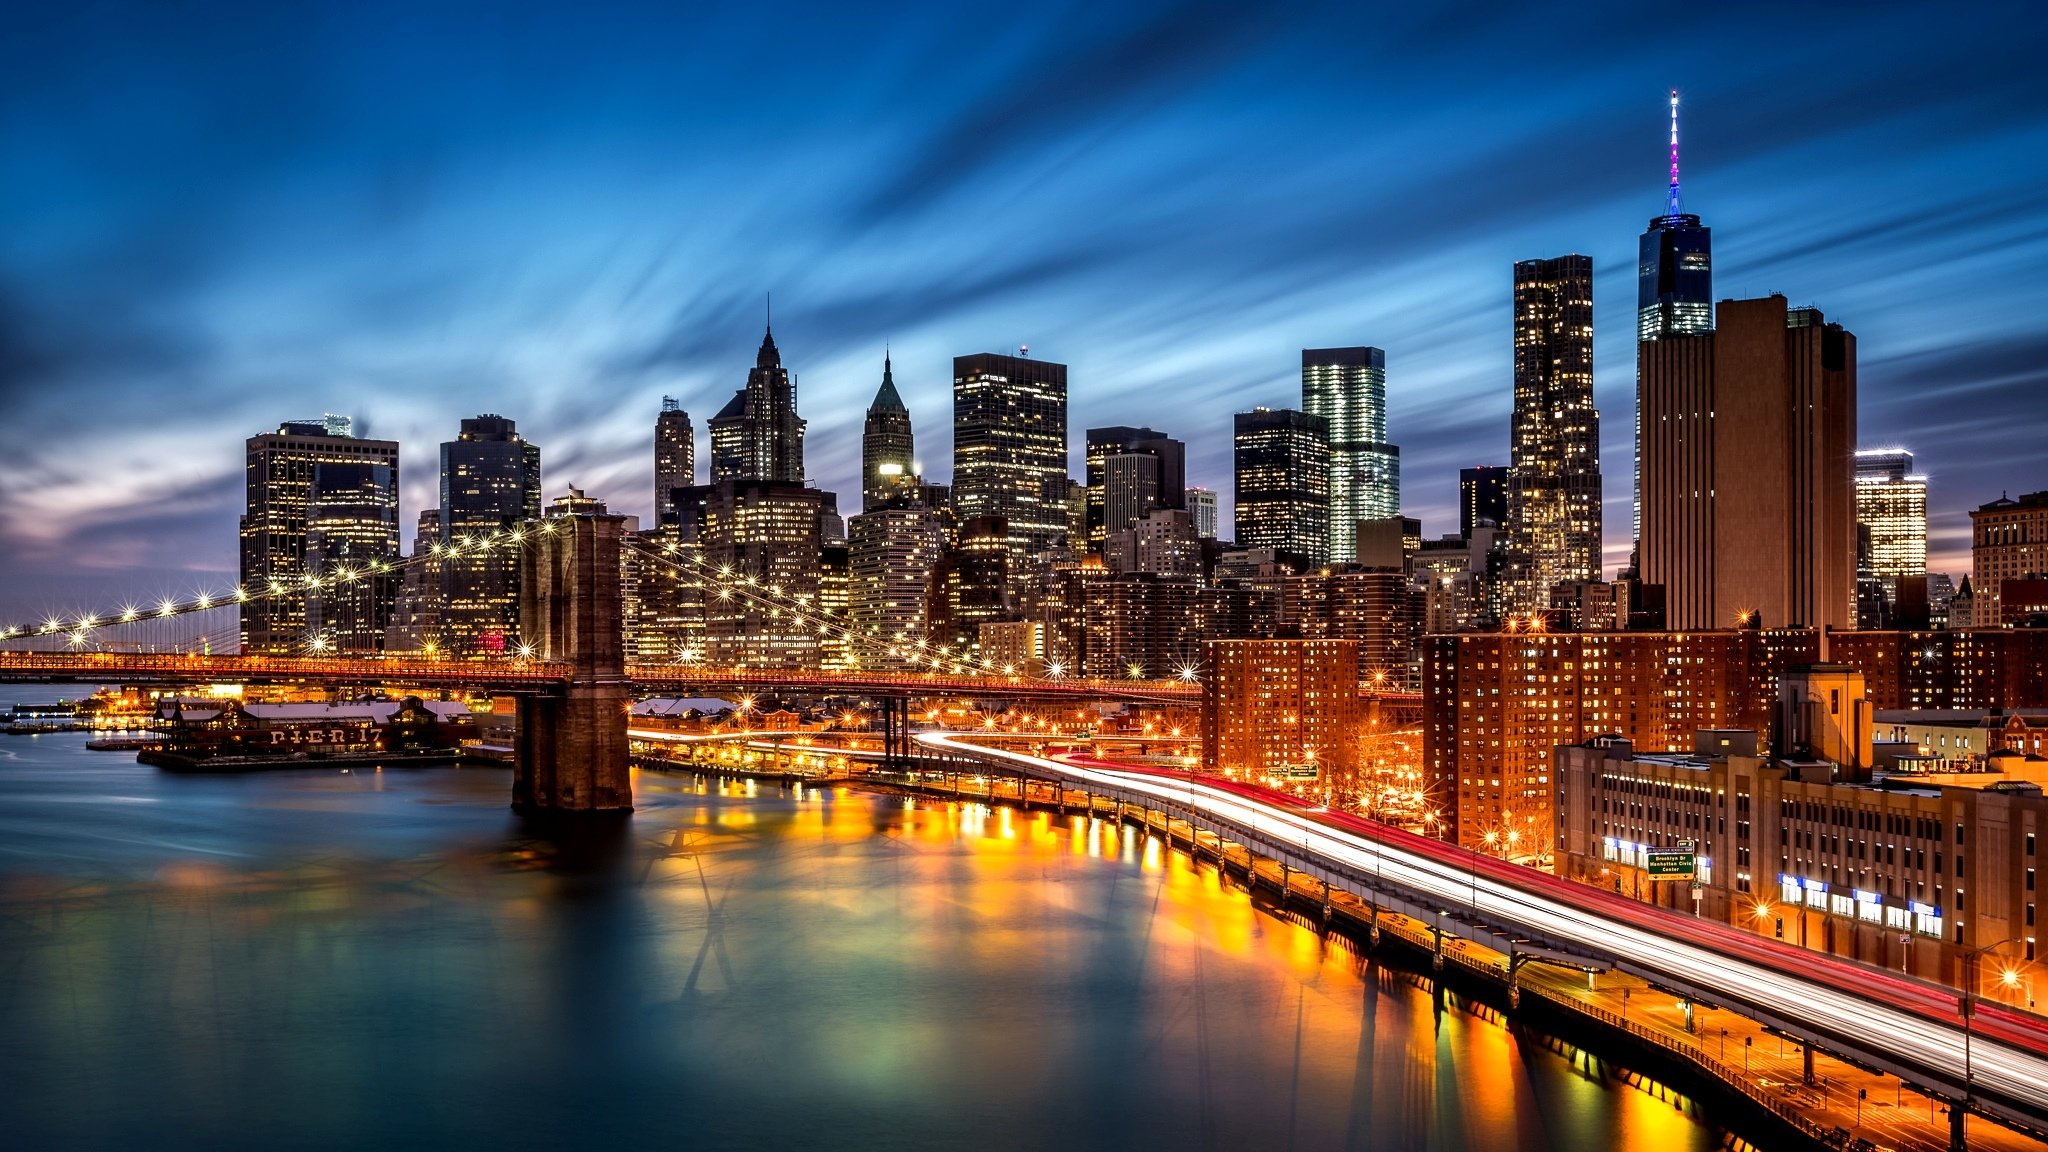 нью-йорк бруклинский мост ист-ривер манхэттен бруклин сша город ночь вечер река тени огни небоскребы здания дорога подсветка